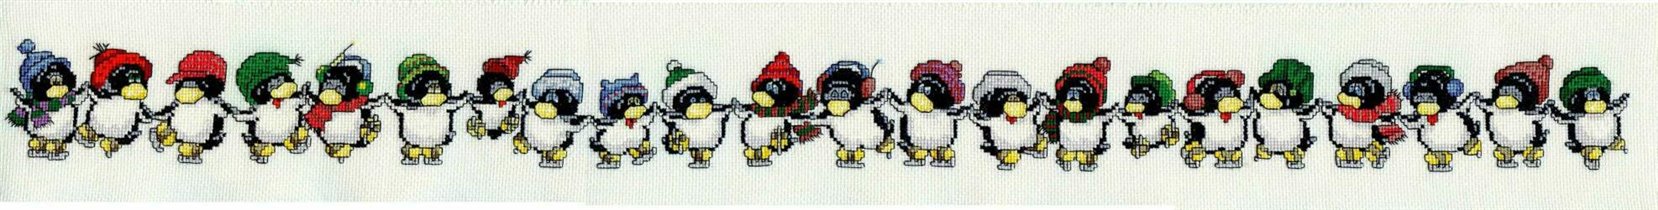 Penguins On Ice